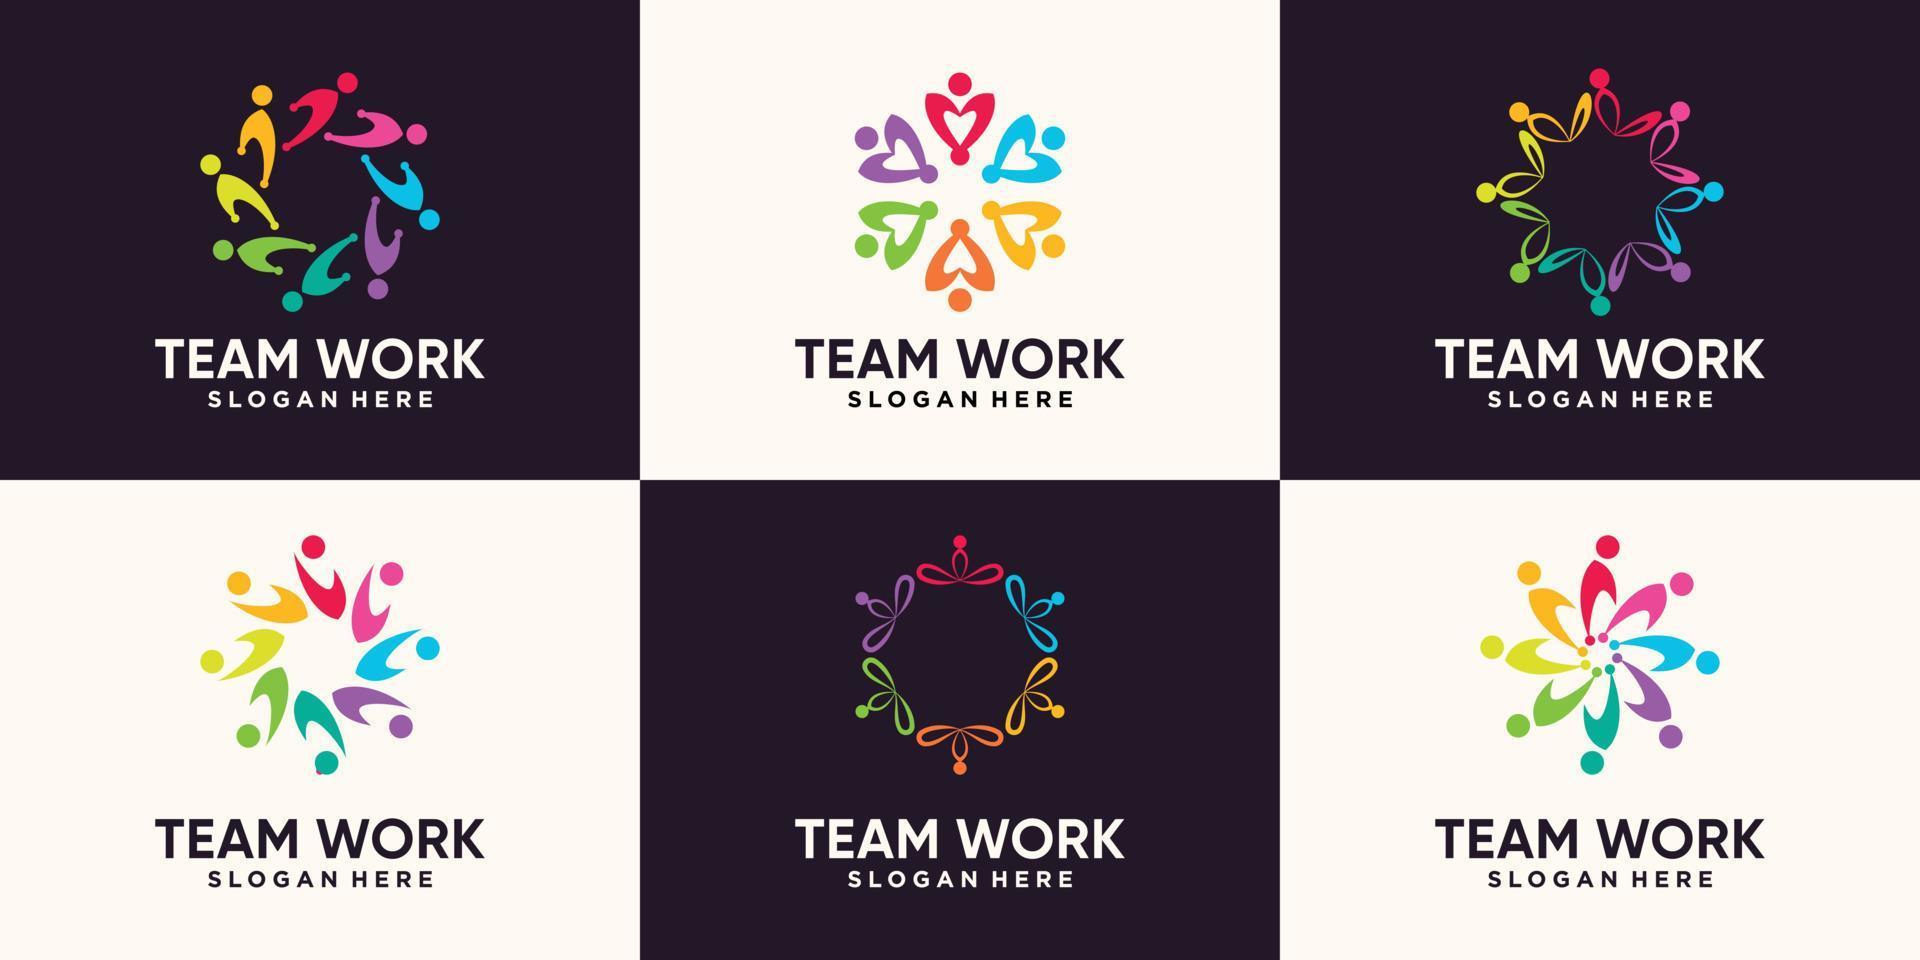 conjunto de trabajo en equipo, diseño de logotipo comunitario con concepto creativo moderno vector